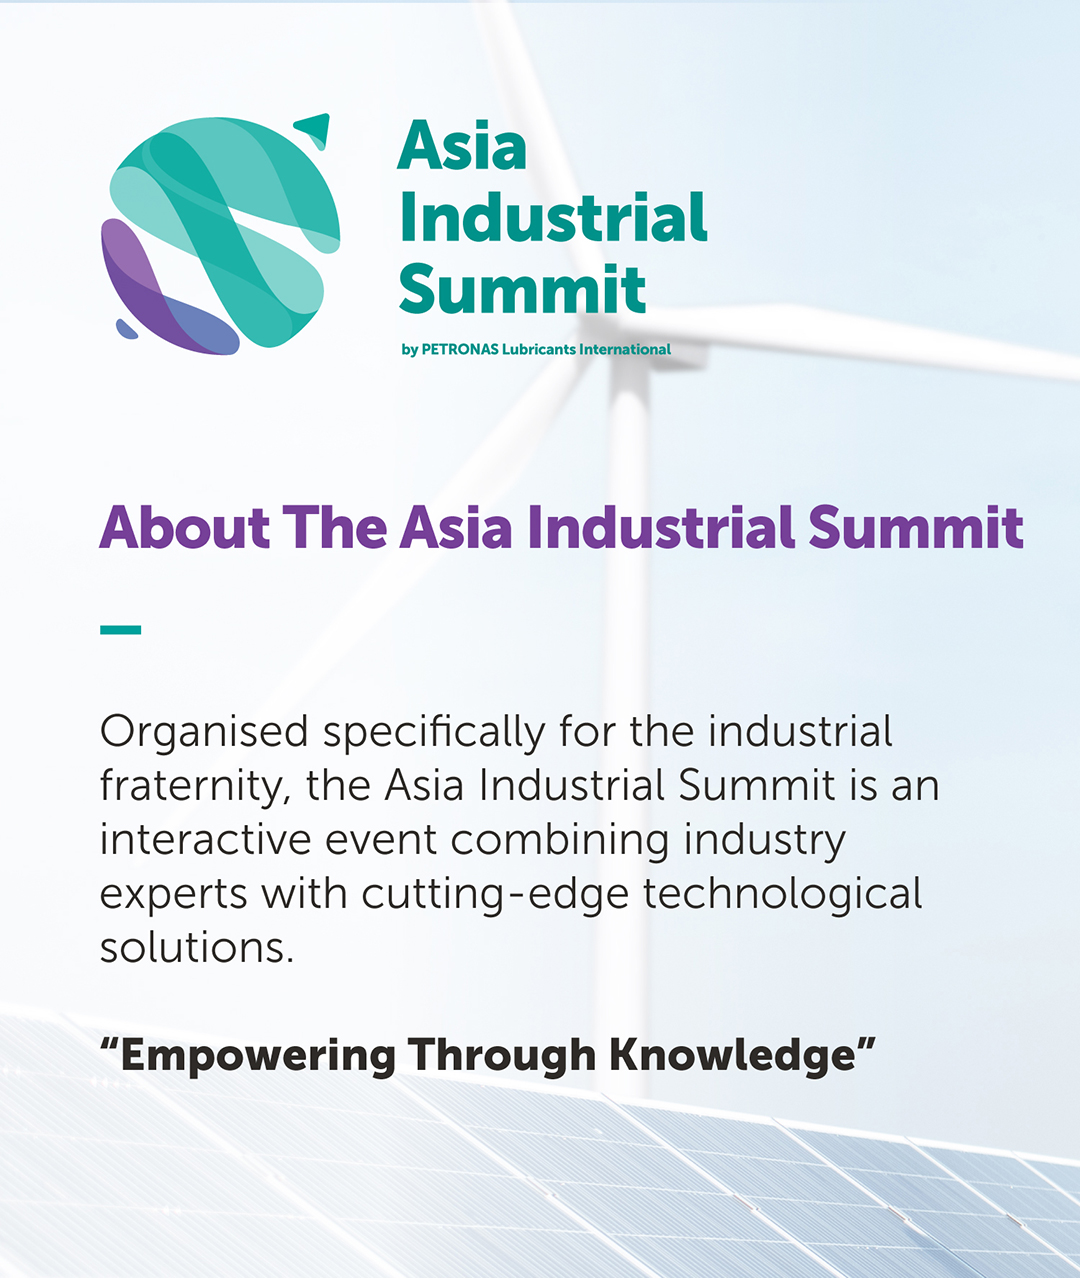 PETRONAS Asia Industrial Summit